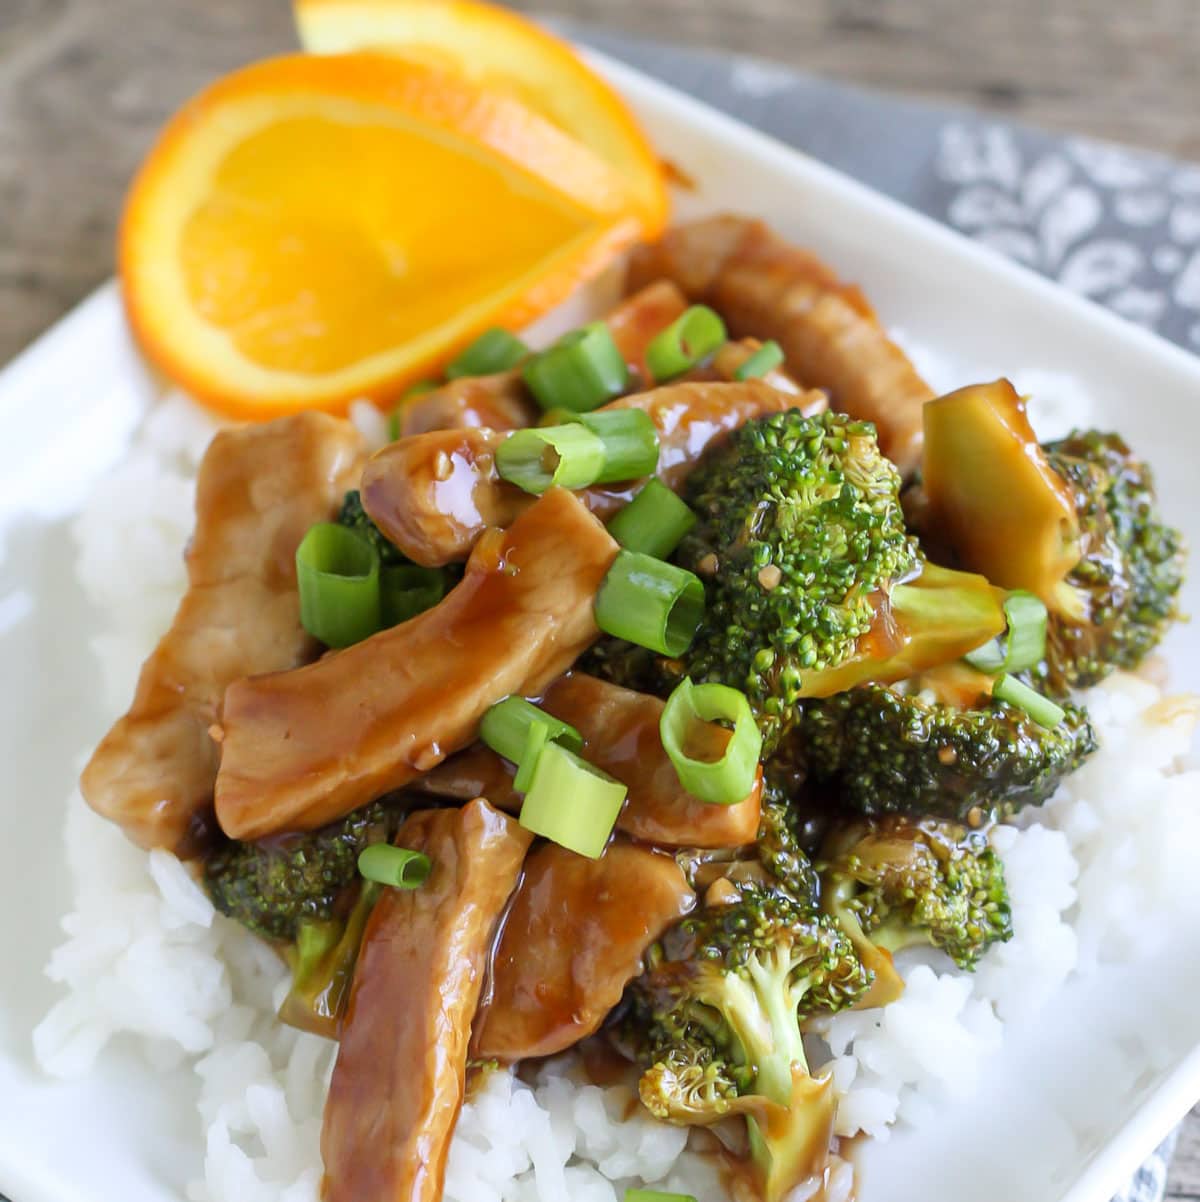 Pork and broccoli stir fry